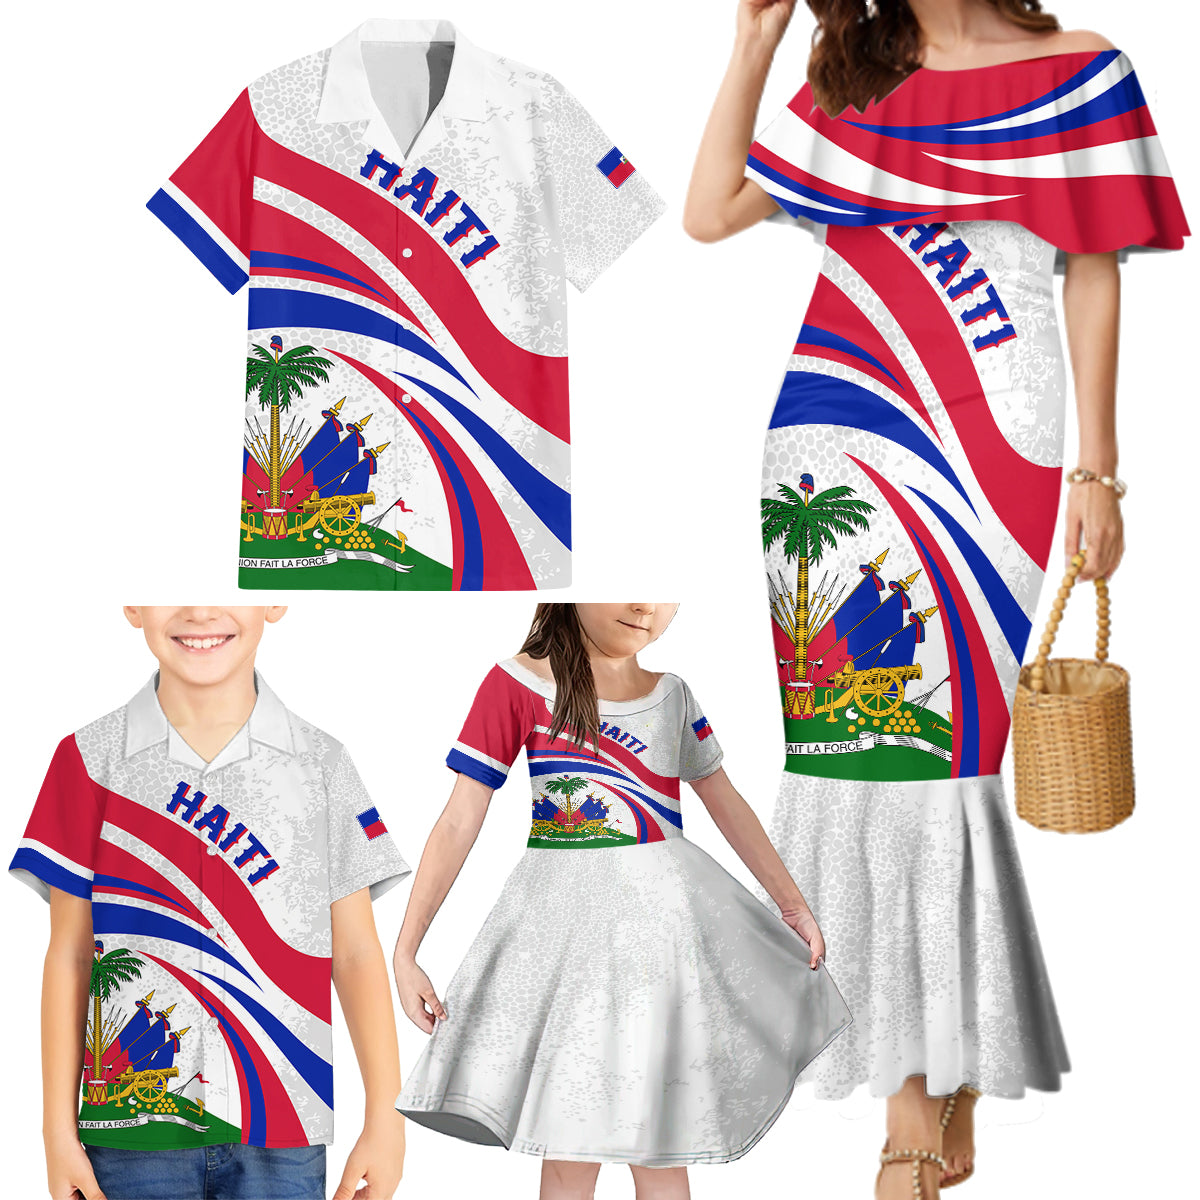 haiti-independence-anniversary-family-matching-mermaid-dress-and-hawaiian-shirt-ayiti-basic-style